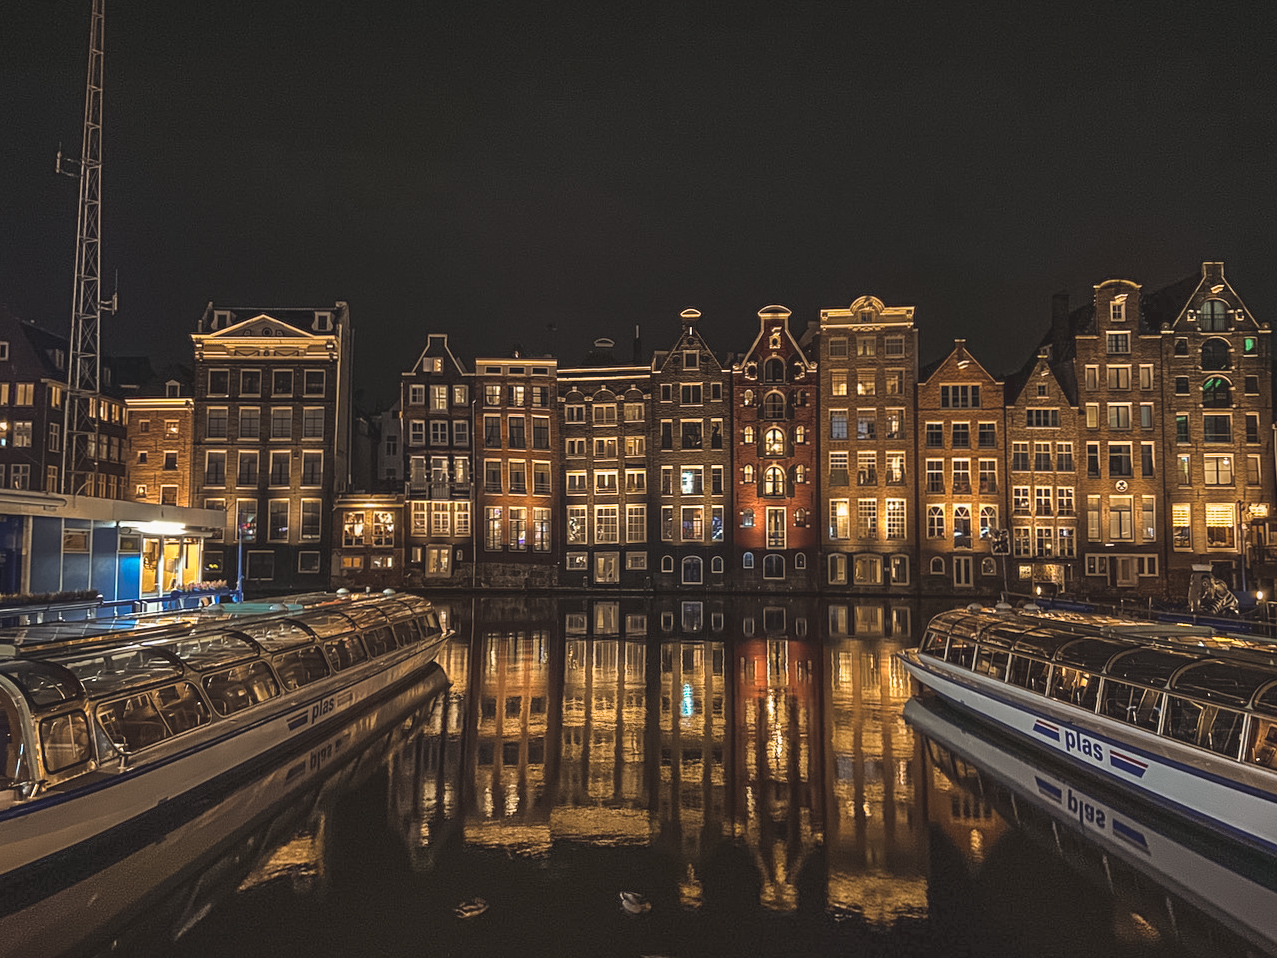 43 Instagram Hot Spots in Europe - Damrak, Amsterdam, Netherlands